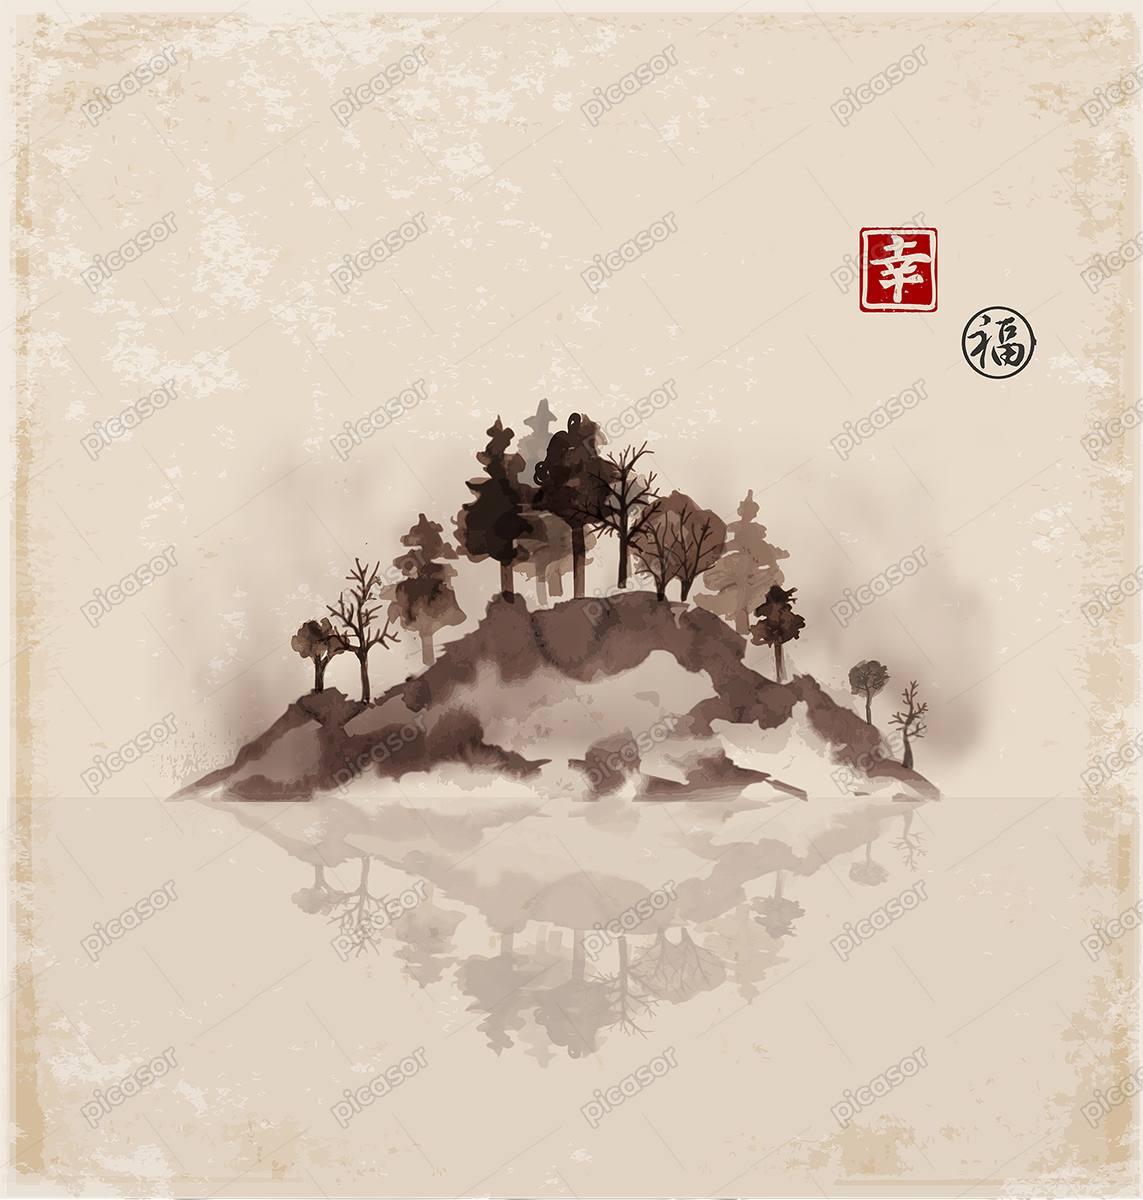 وکتور نقاشی کوه و جنگلهای ژاپن،هنر نقاشی ژاپنی